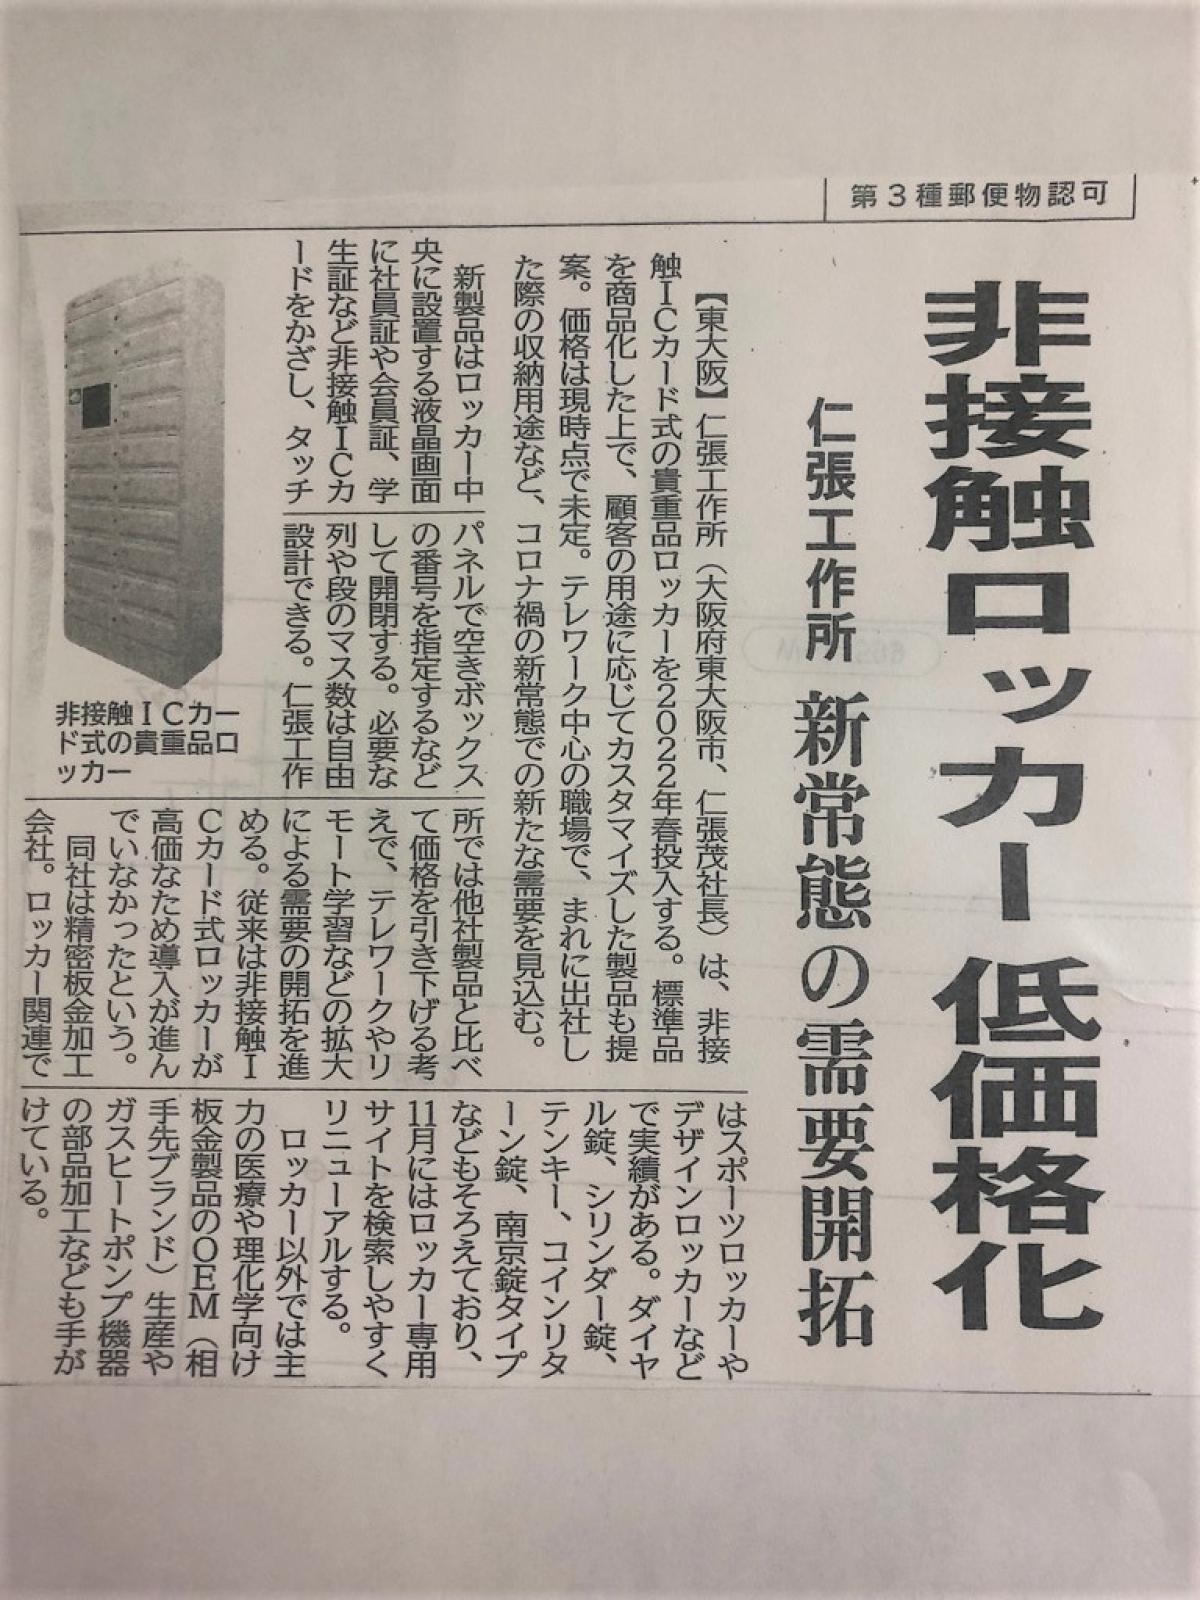 【ICカード式ロッカーN-forme+】9/6(月)の日刊工業新聞にて掲載